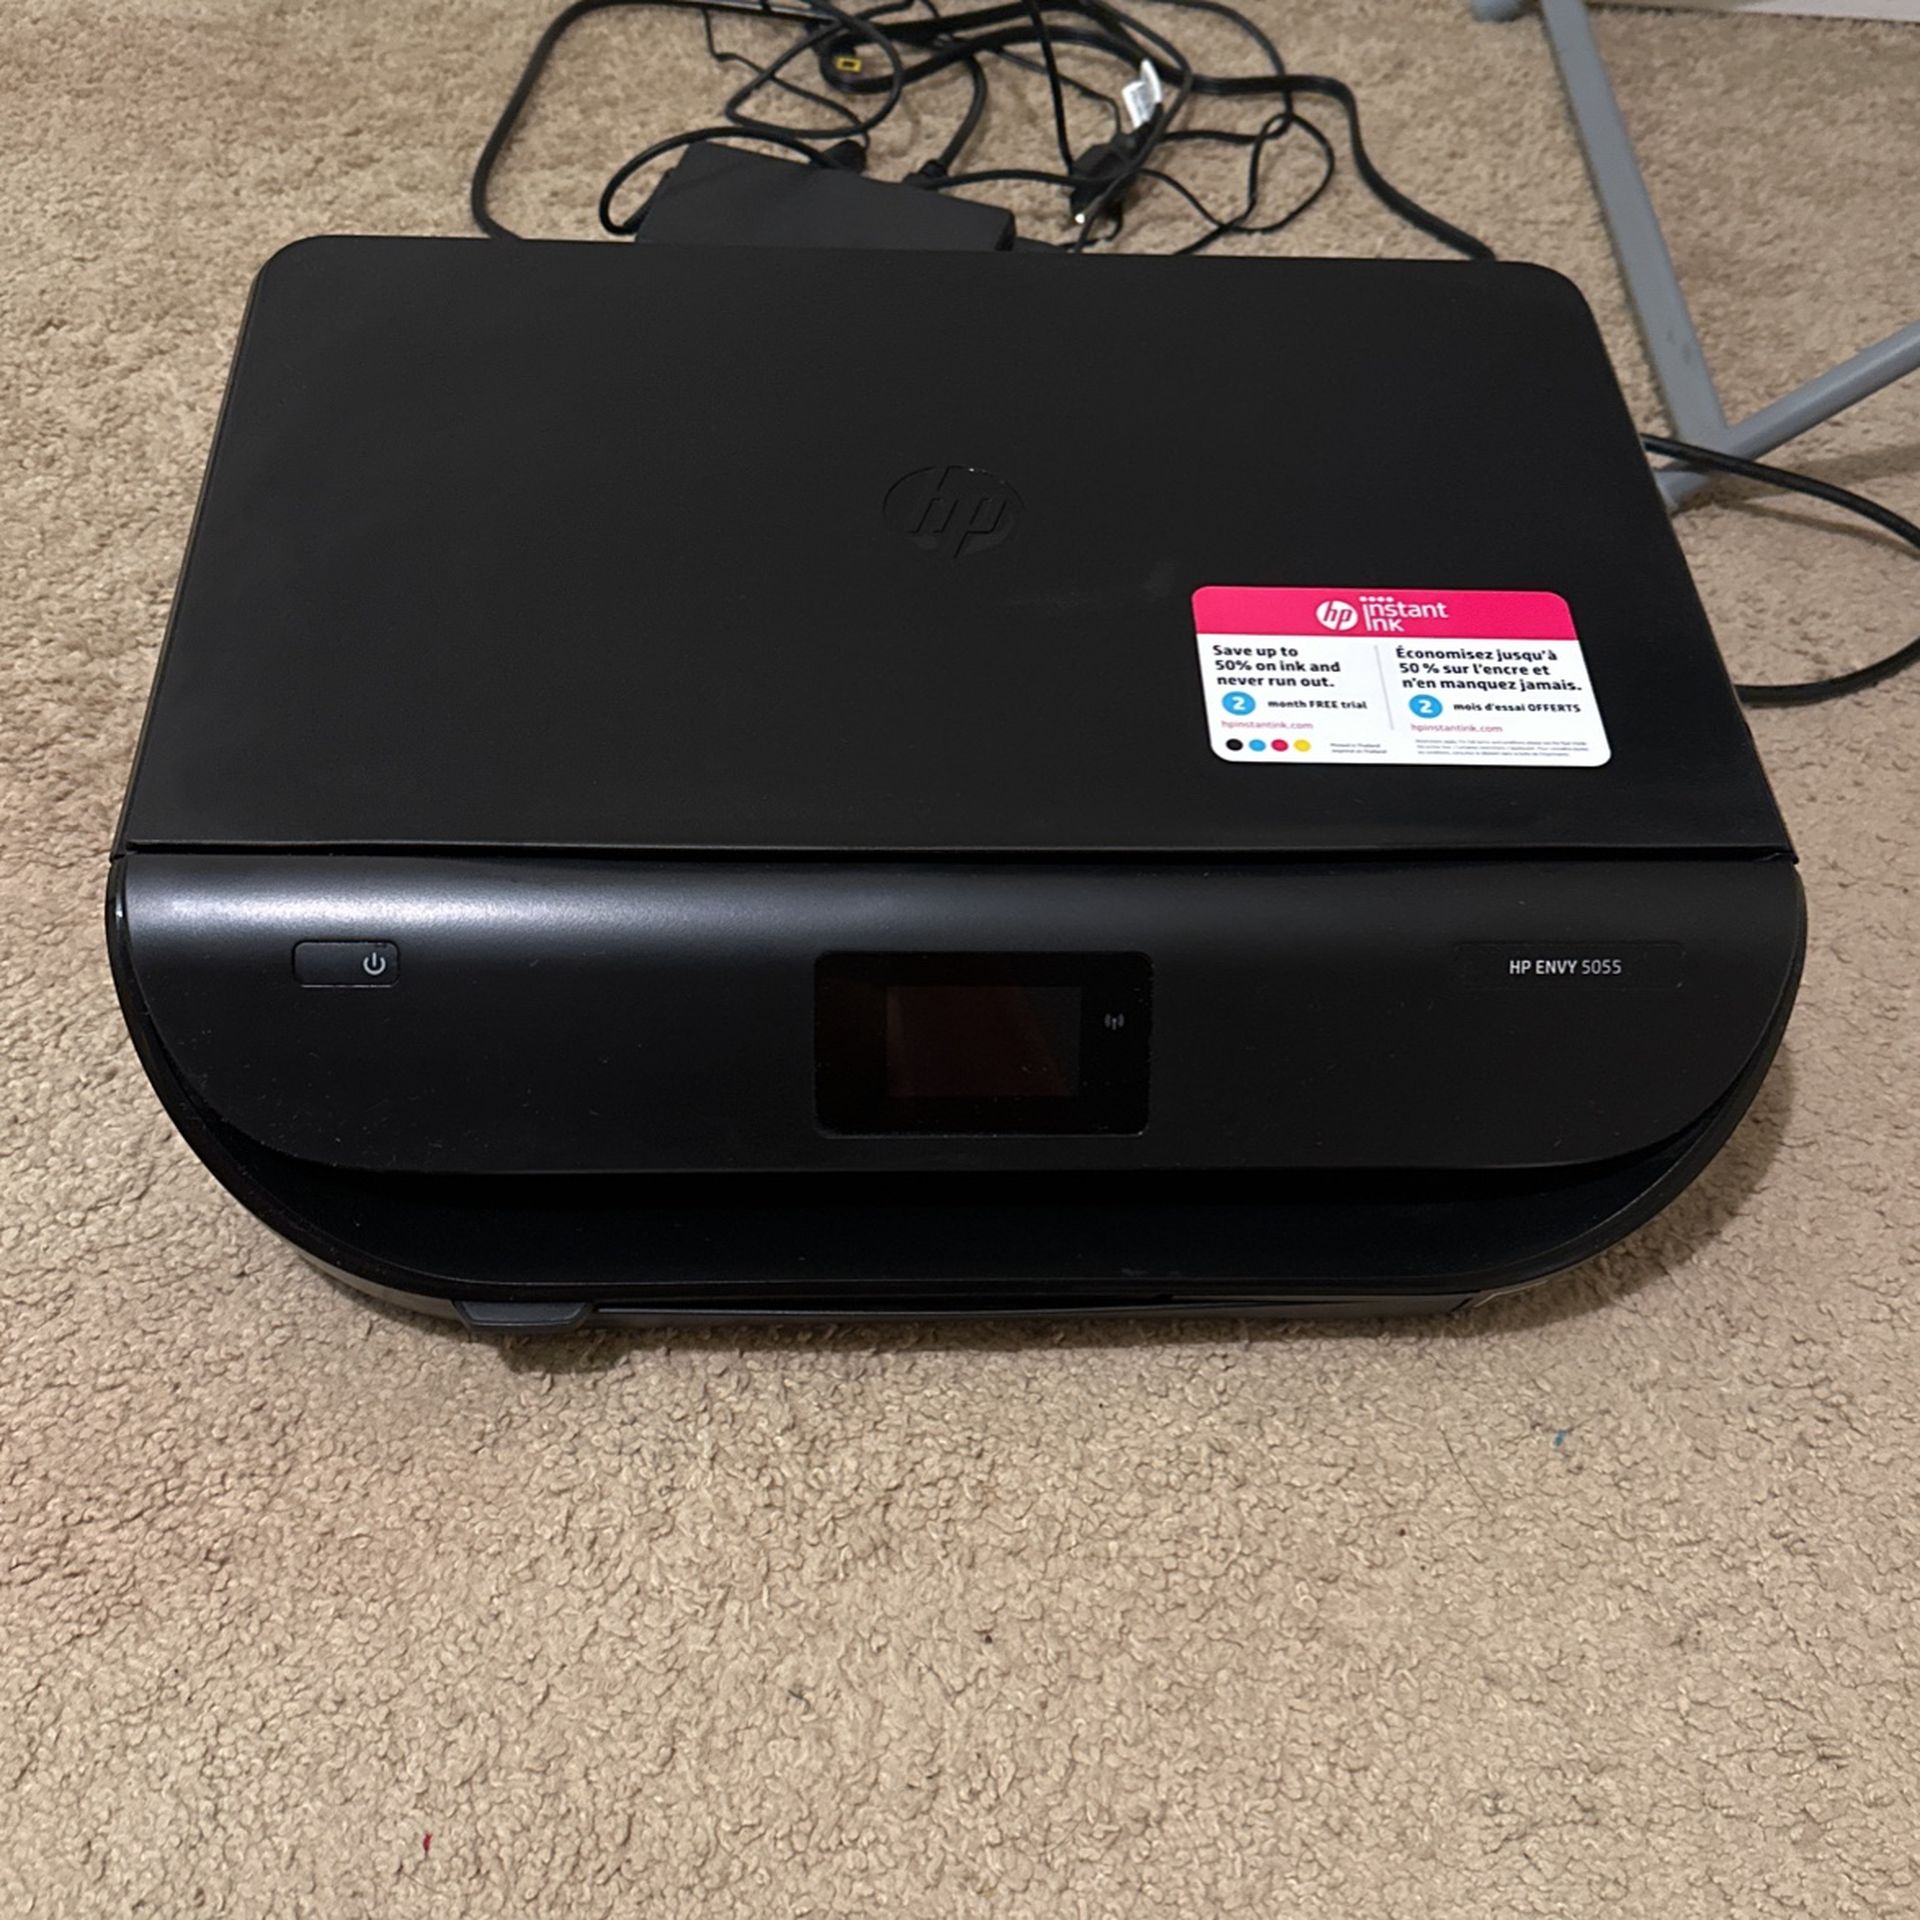 HP Envy 5055 Printer Scanner And Copier